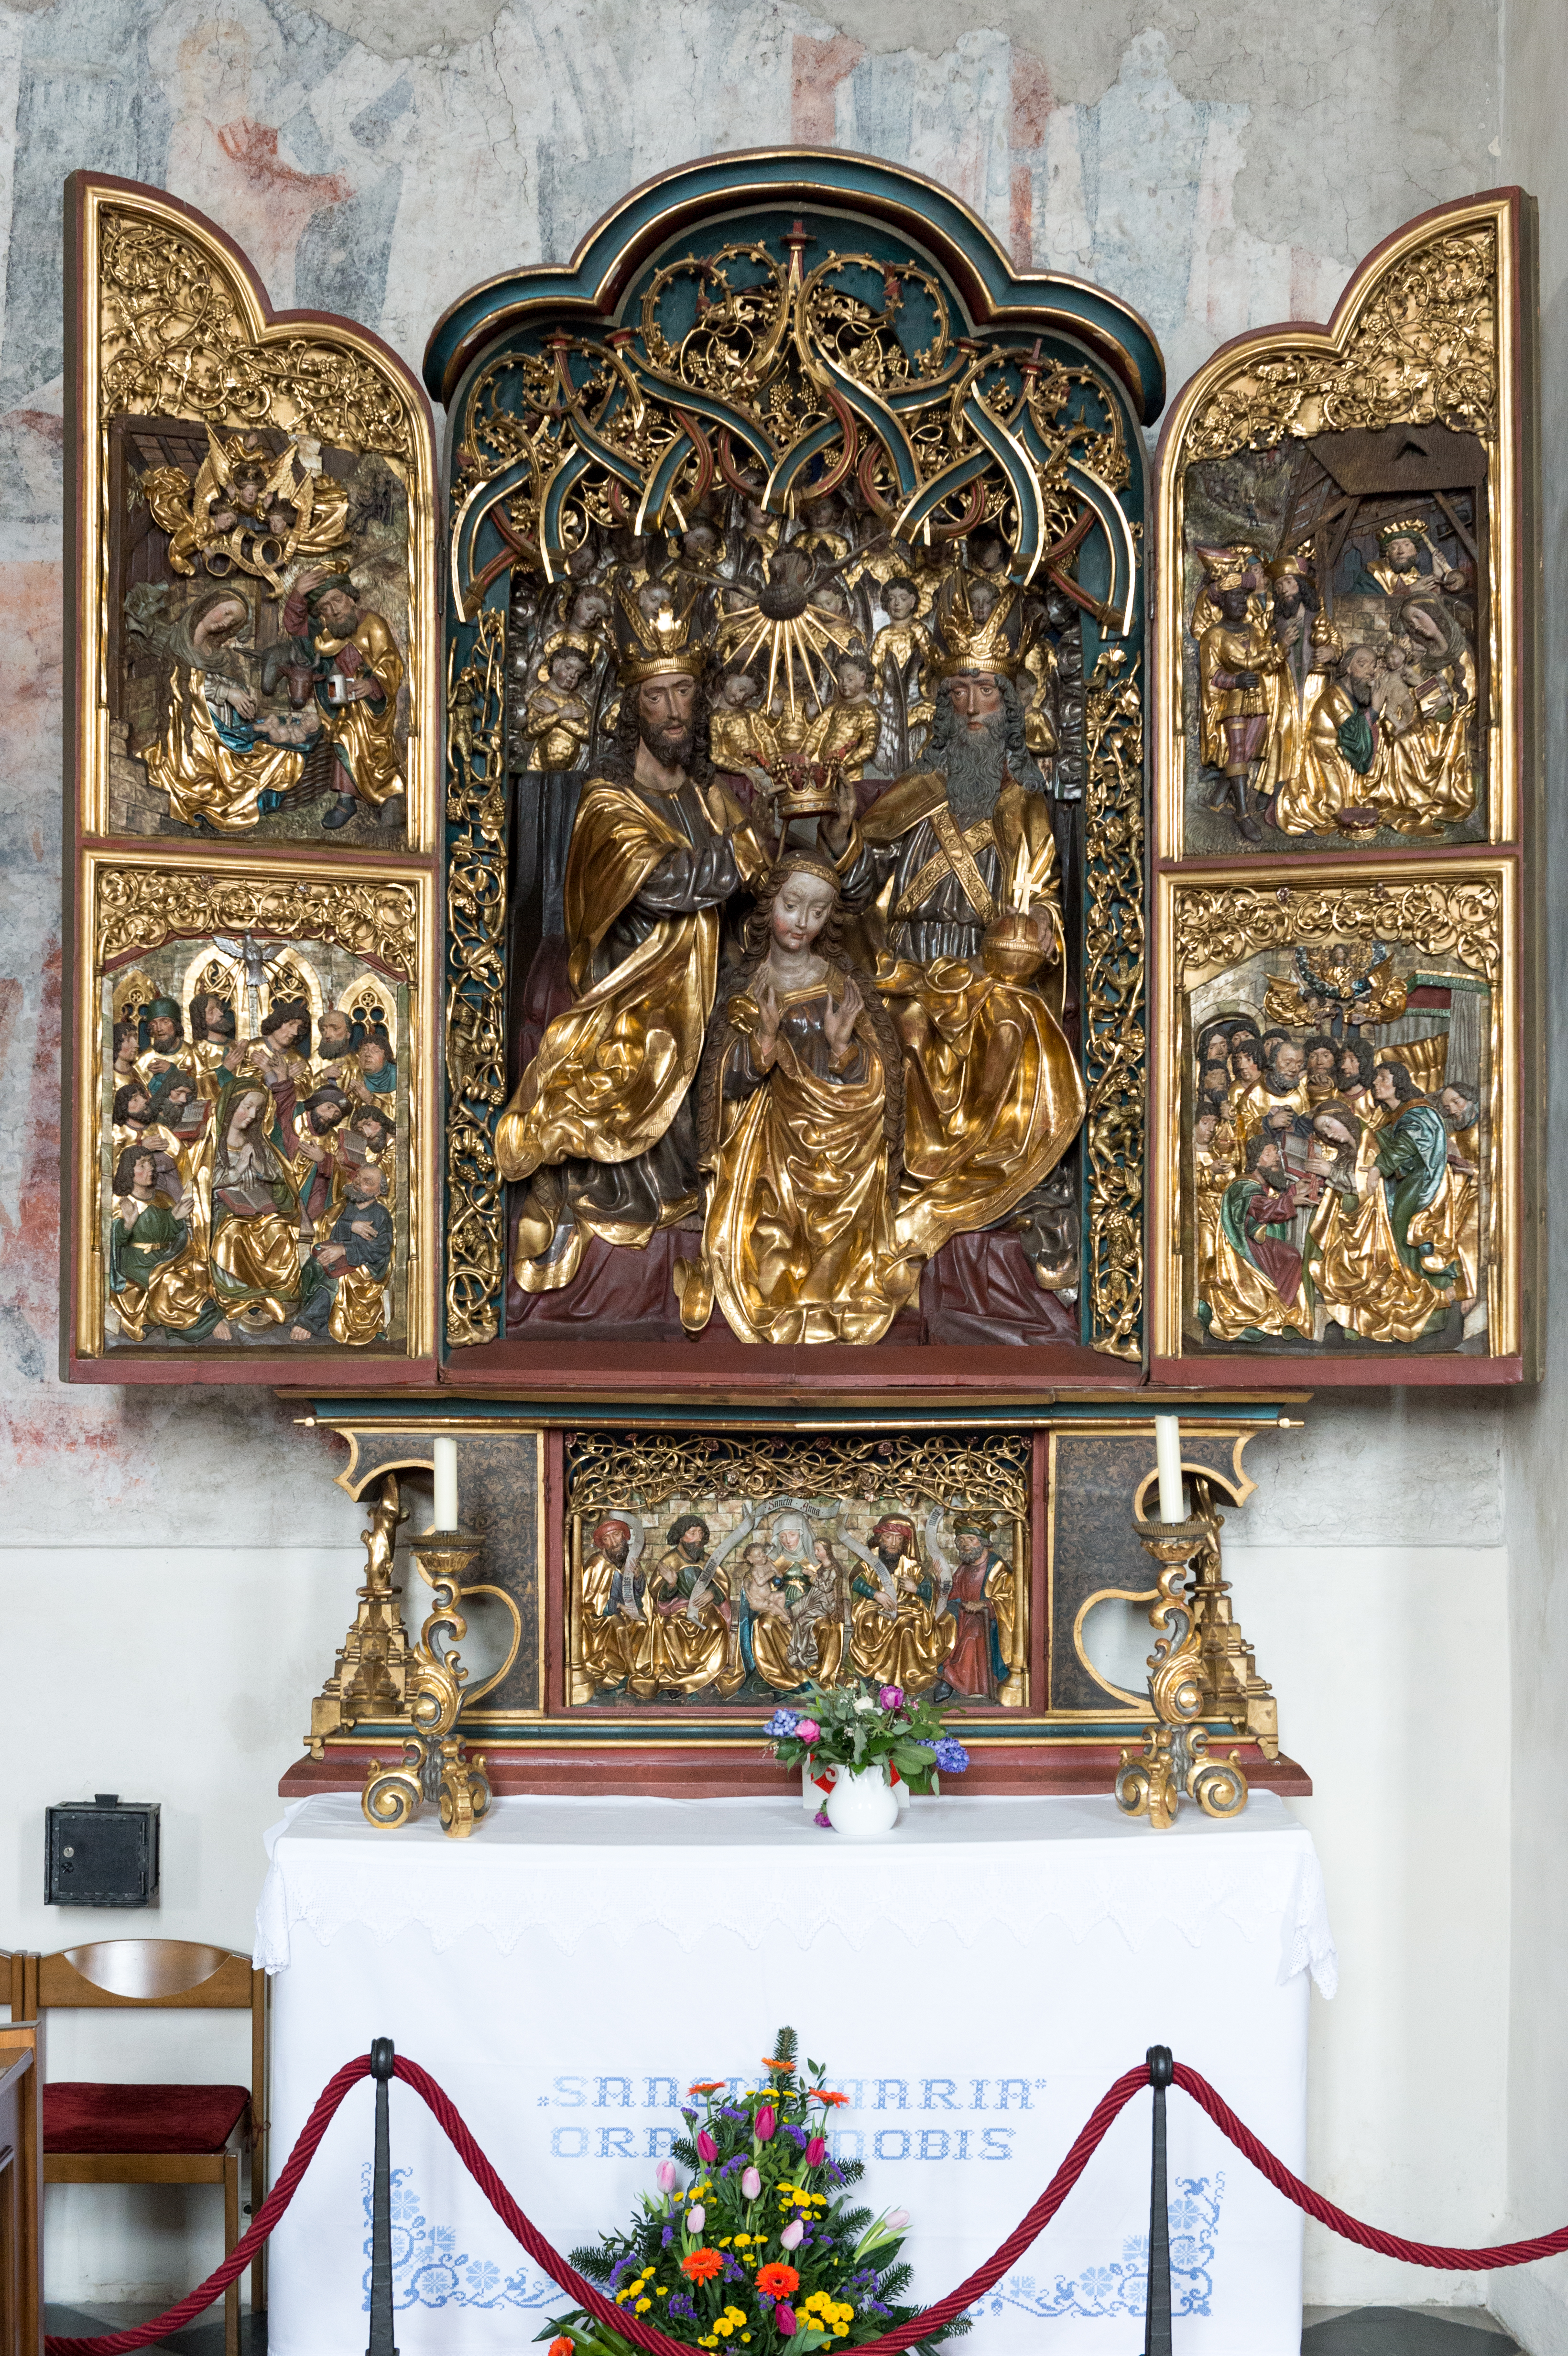 Villach Maria Gail Wallfahrtskirche Zu Unserer Lieben Frau gotischer Fluegelaltar 13022015 9836